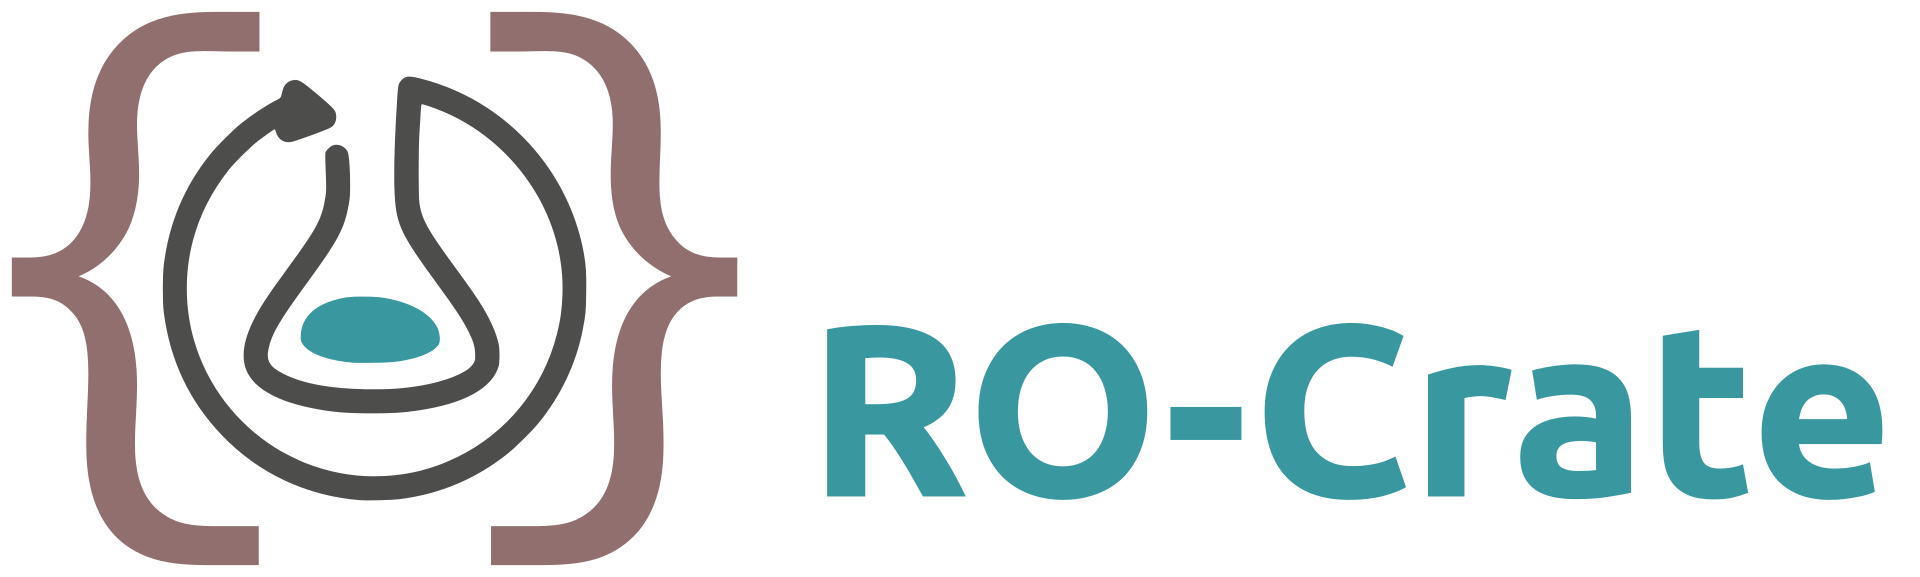 RO Crate logo